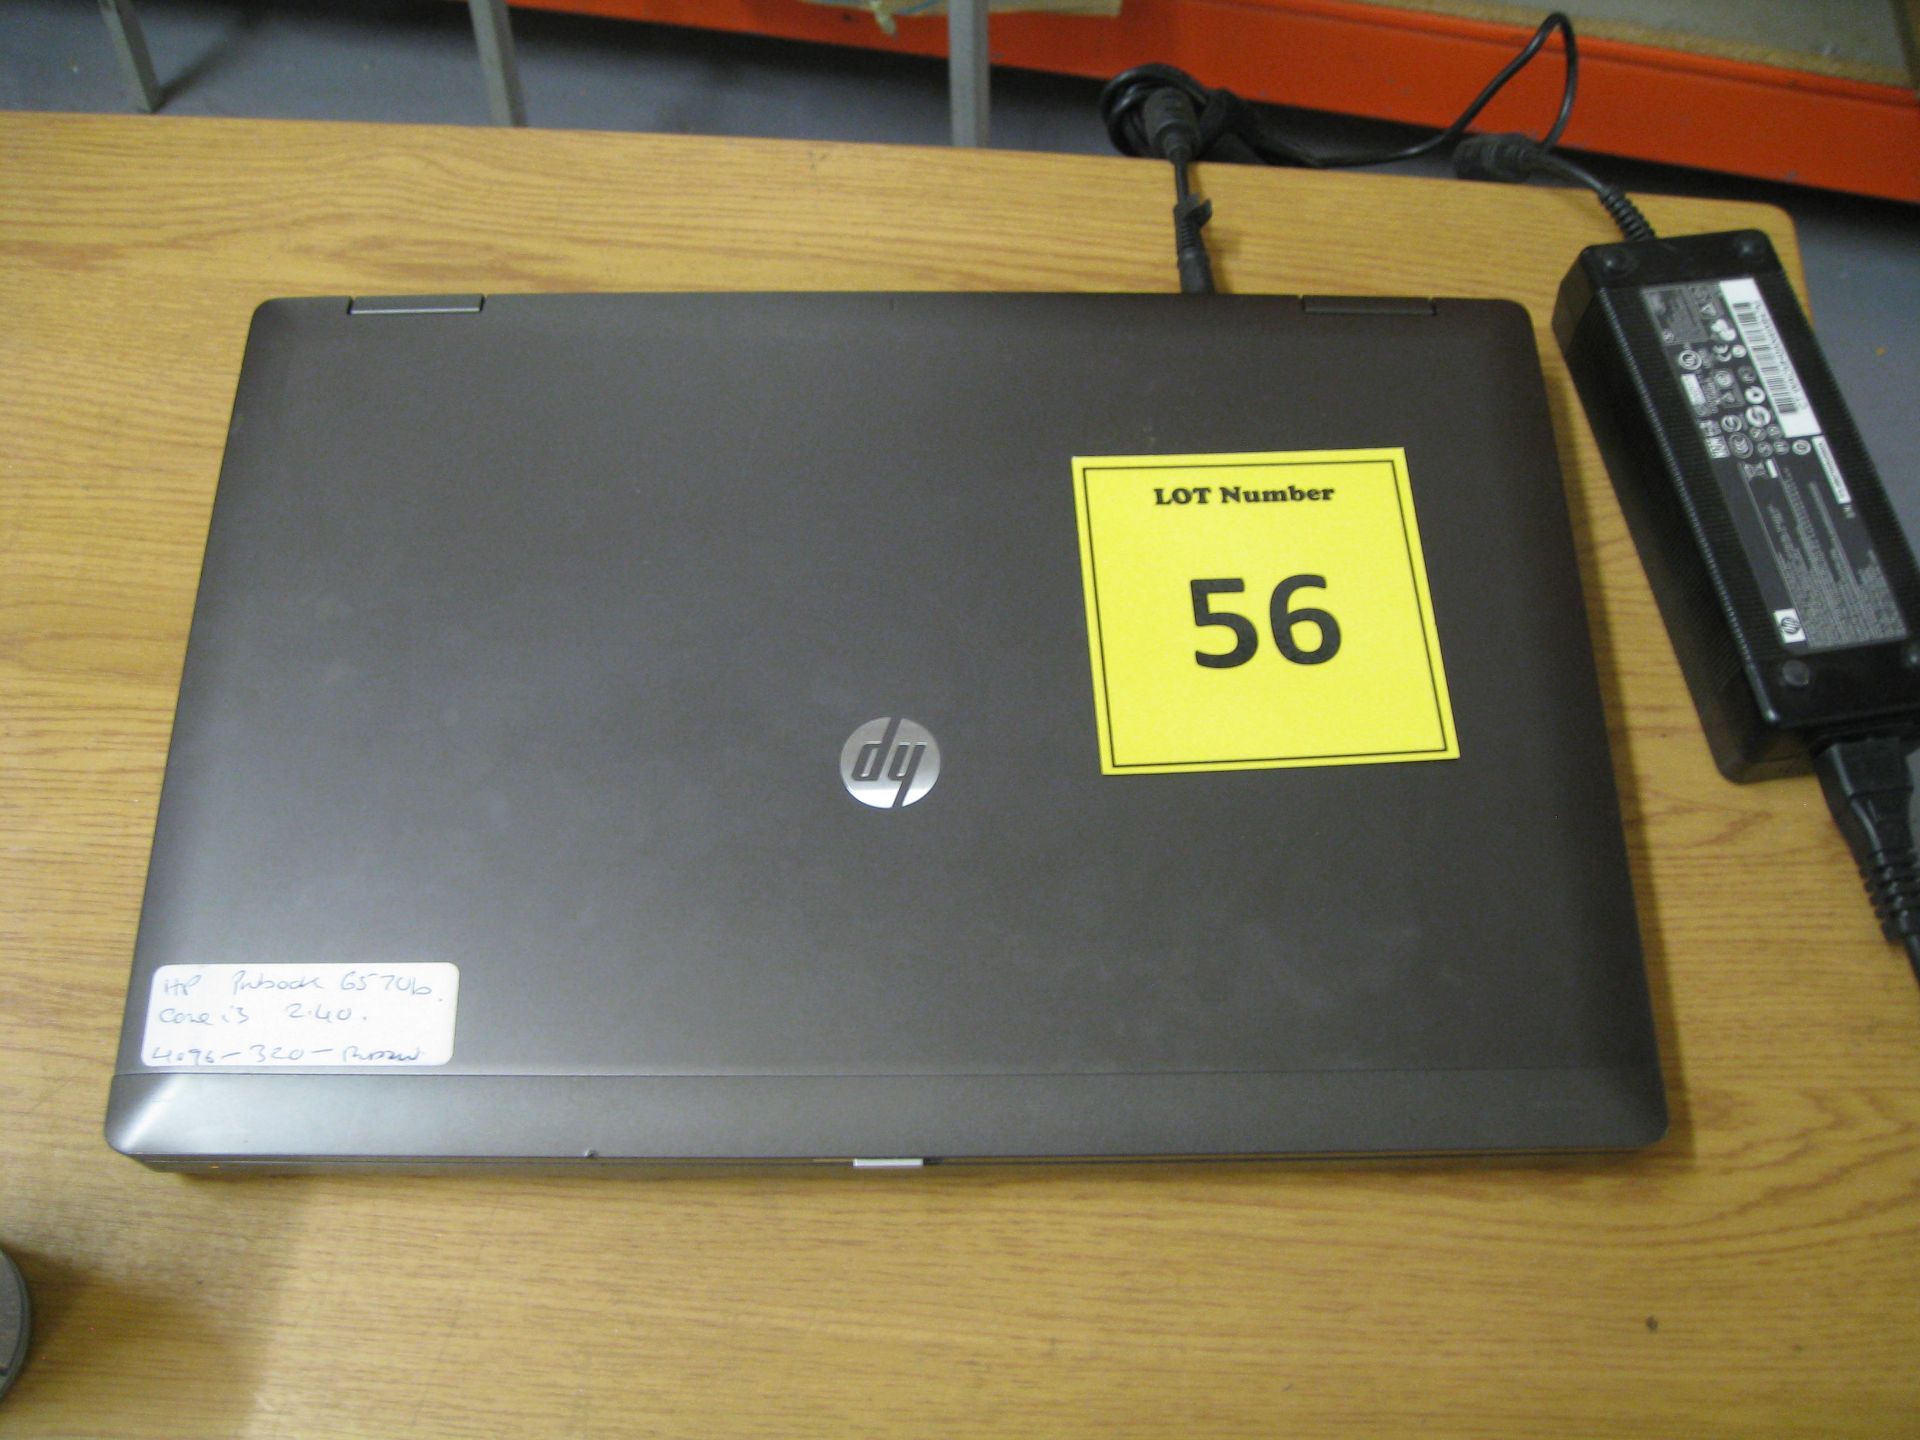 HP Probook 6570b Laptop, Core-i3/2.40GHZ, 4gb RAM/320gb HDD, dvdrw, psu - Win 8 Pro sticker - Bild 3 aus 3